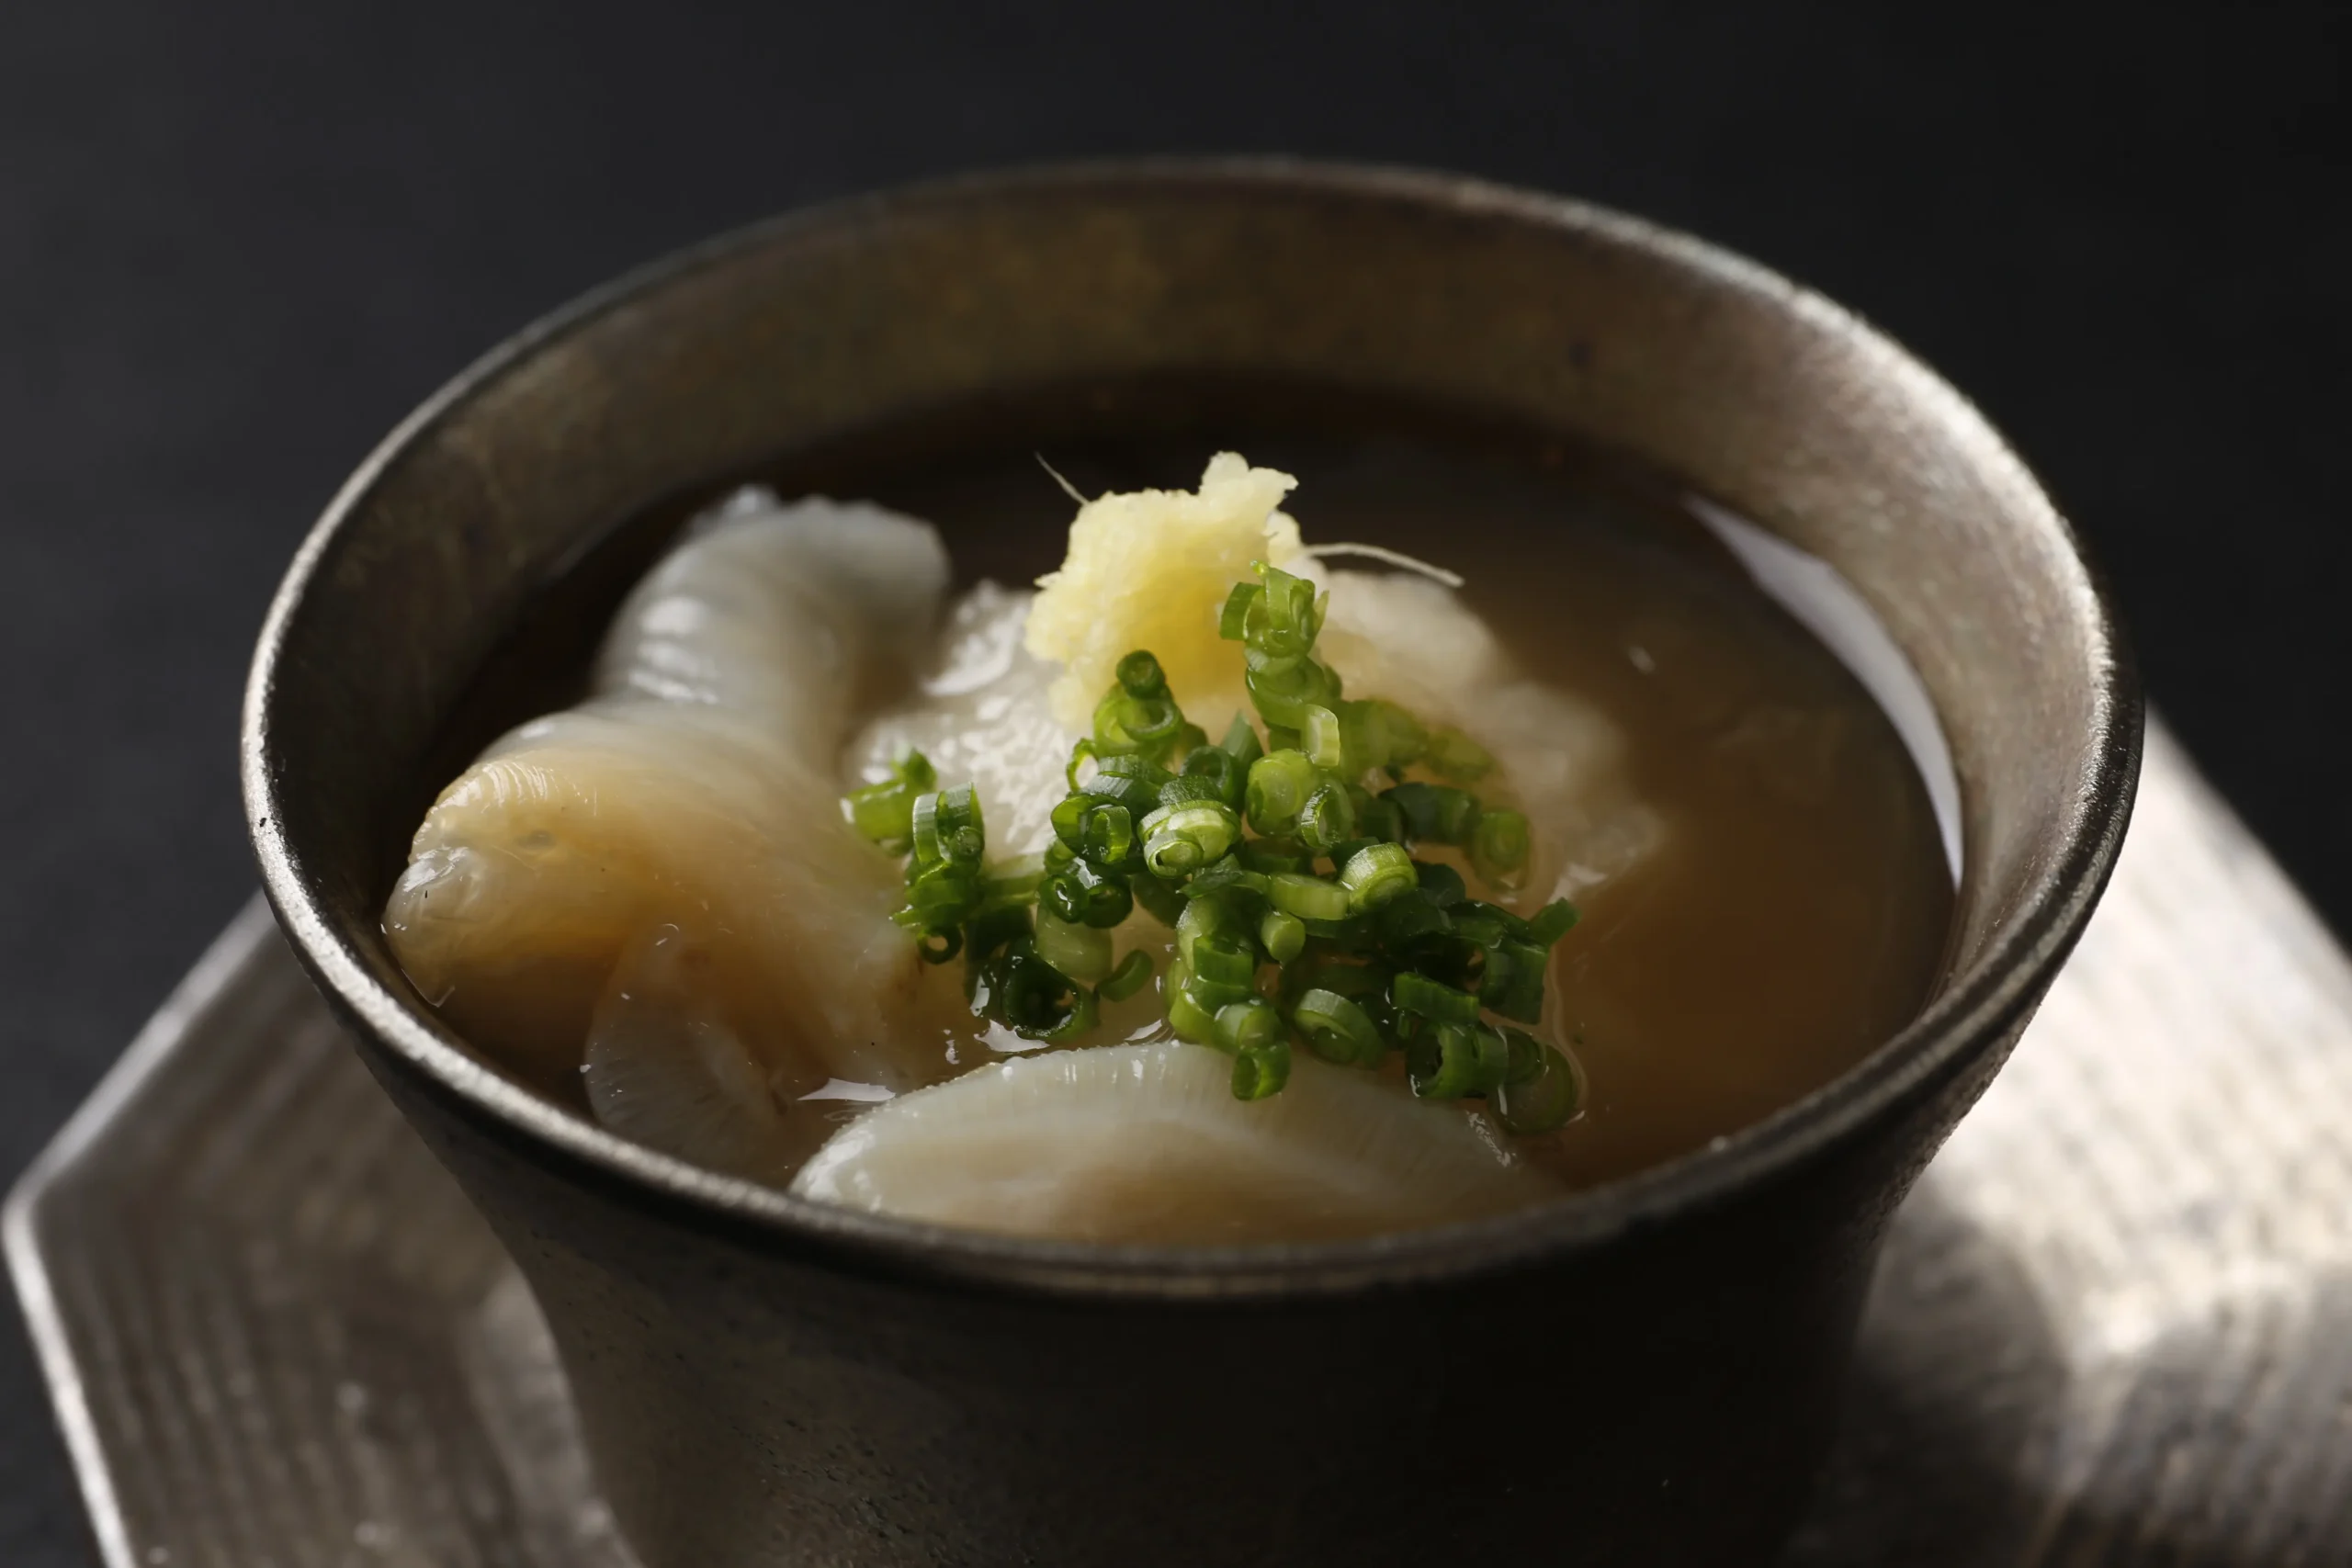 Awaji Island onion soup